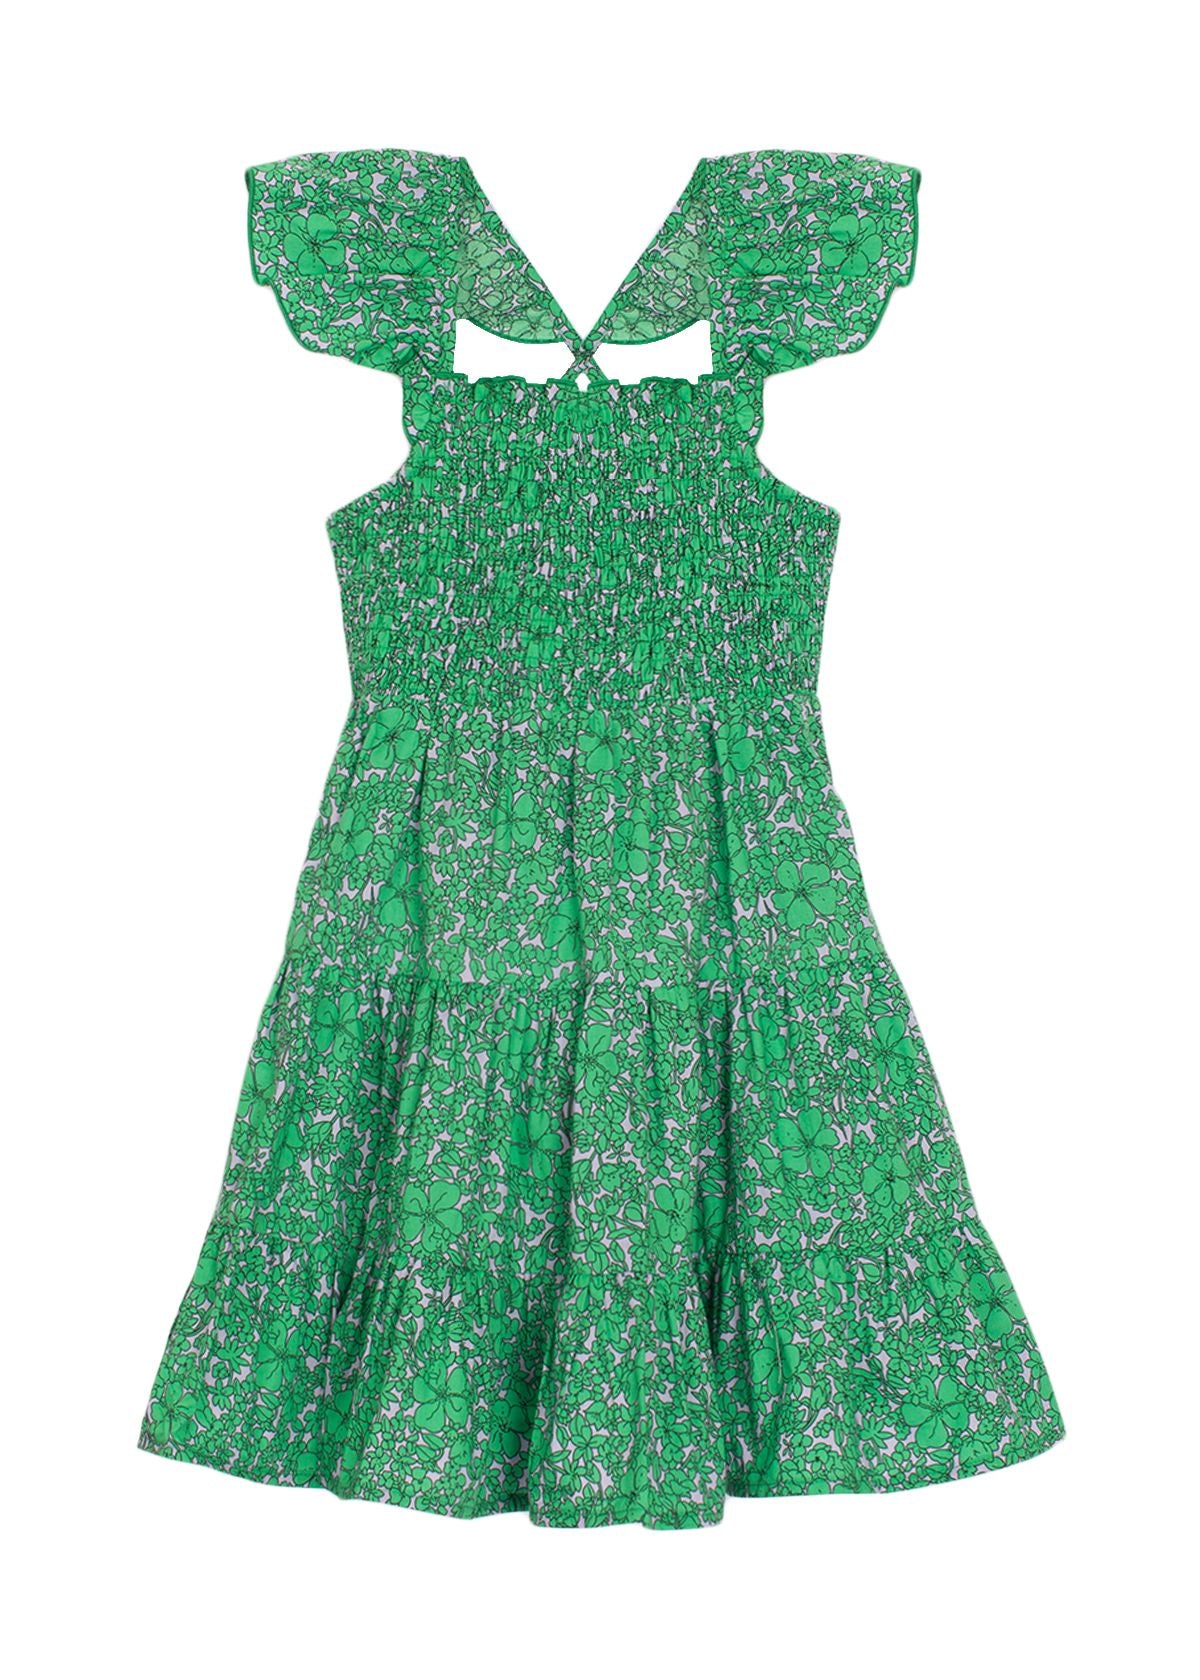 Mabel & Honey Vibrant Meadows Printed Cotton Dress